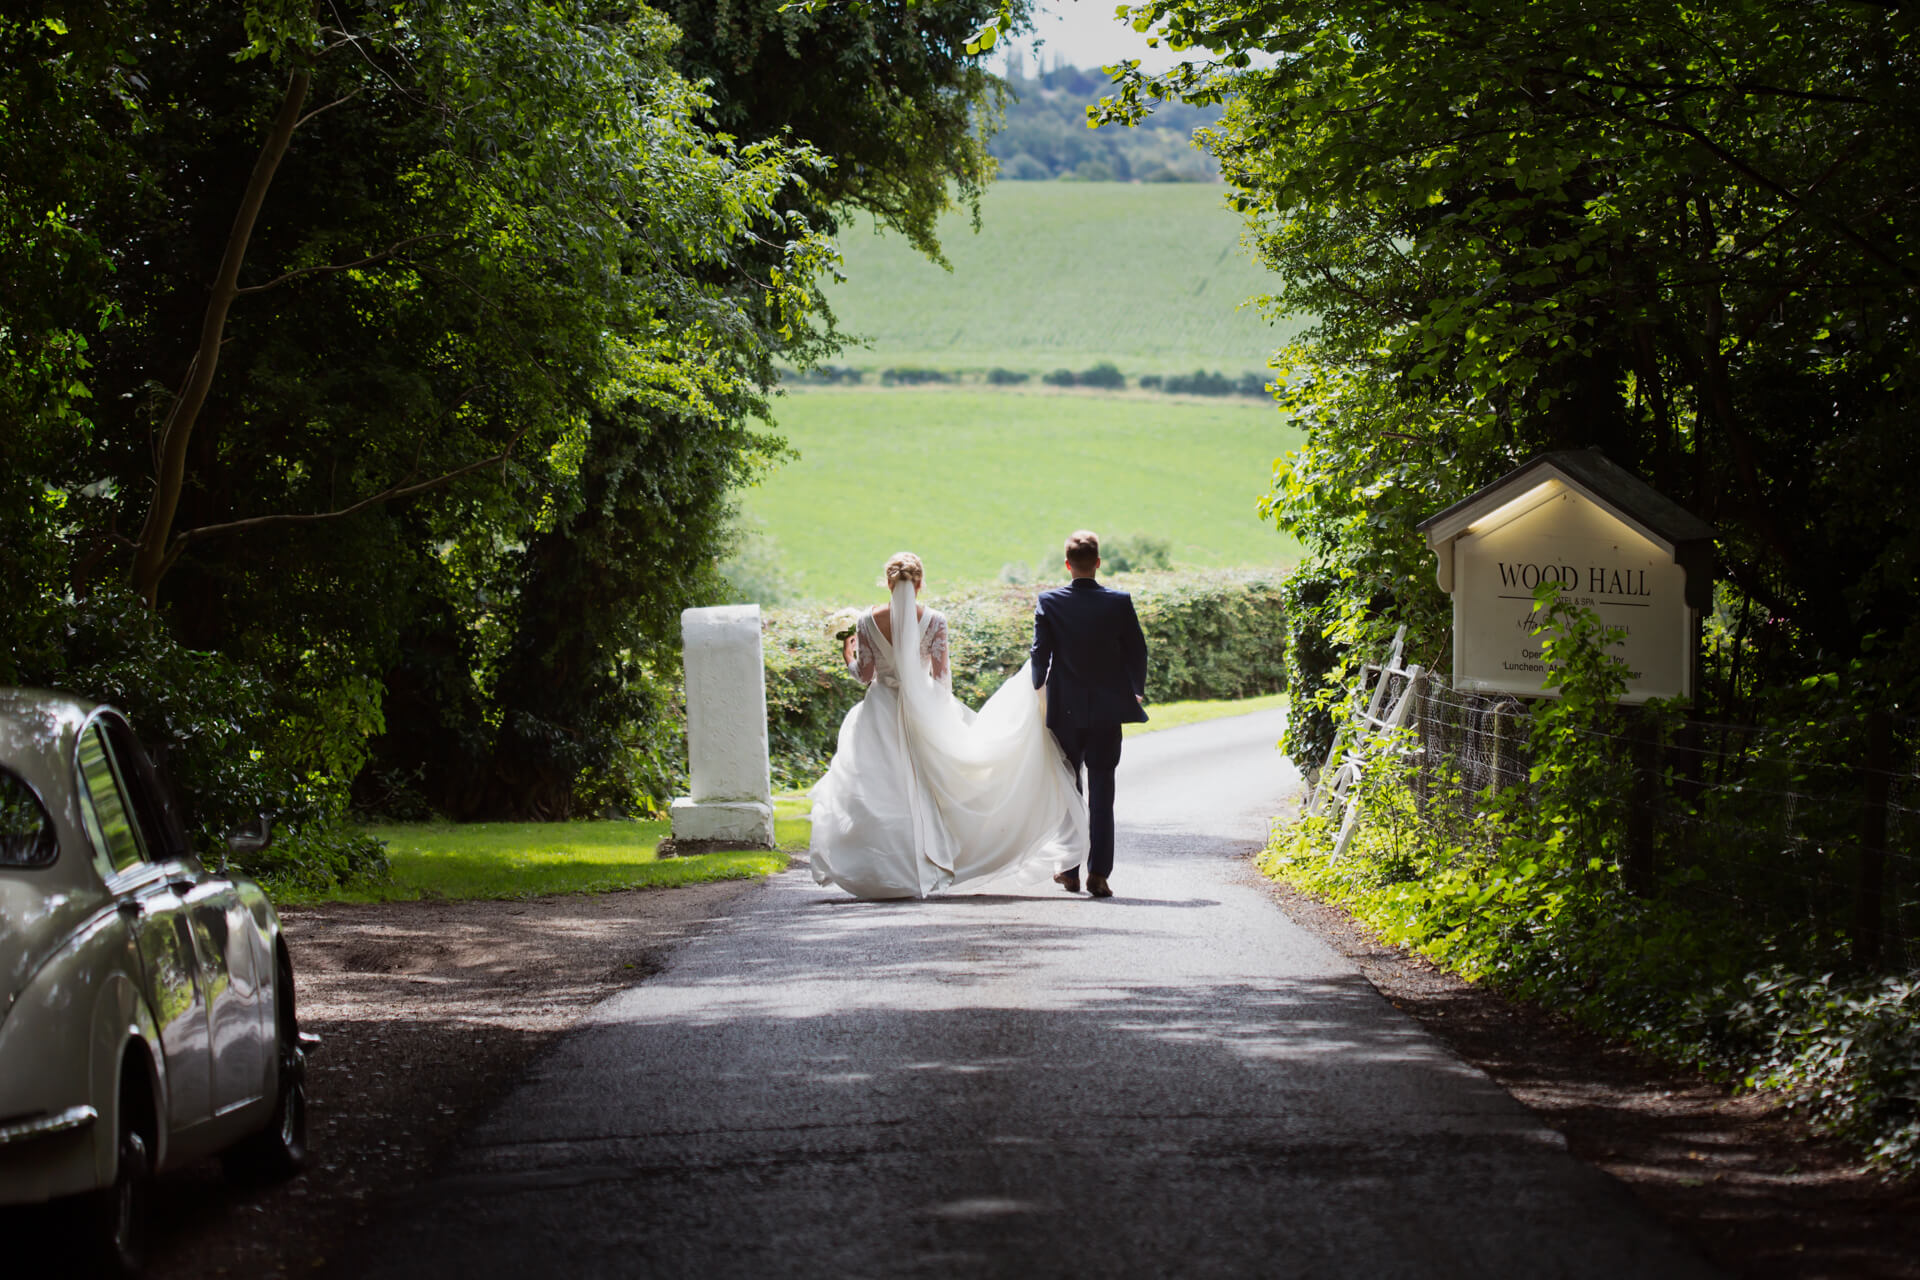 Wood Hall Hotel Wedding Photography - Couple walking towards Wood Hall